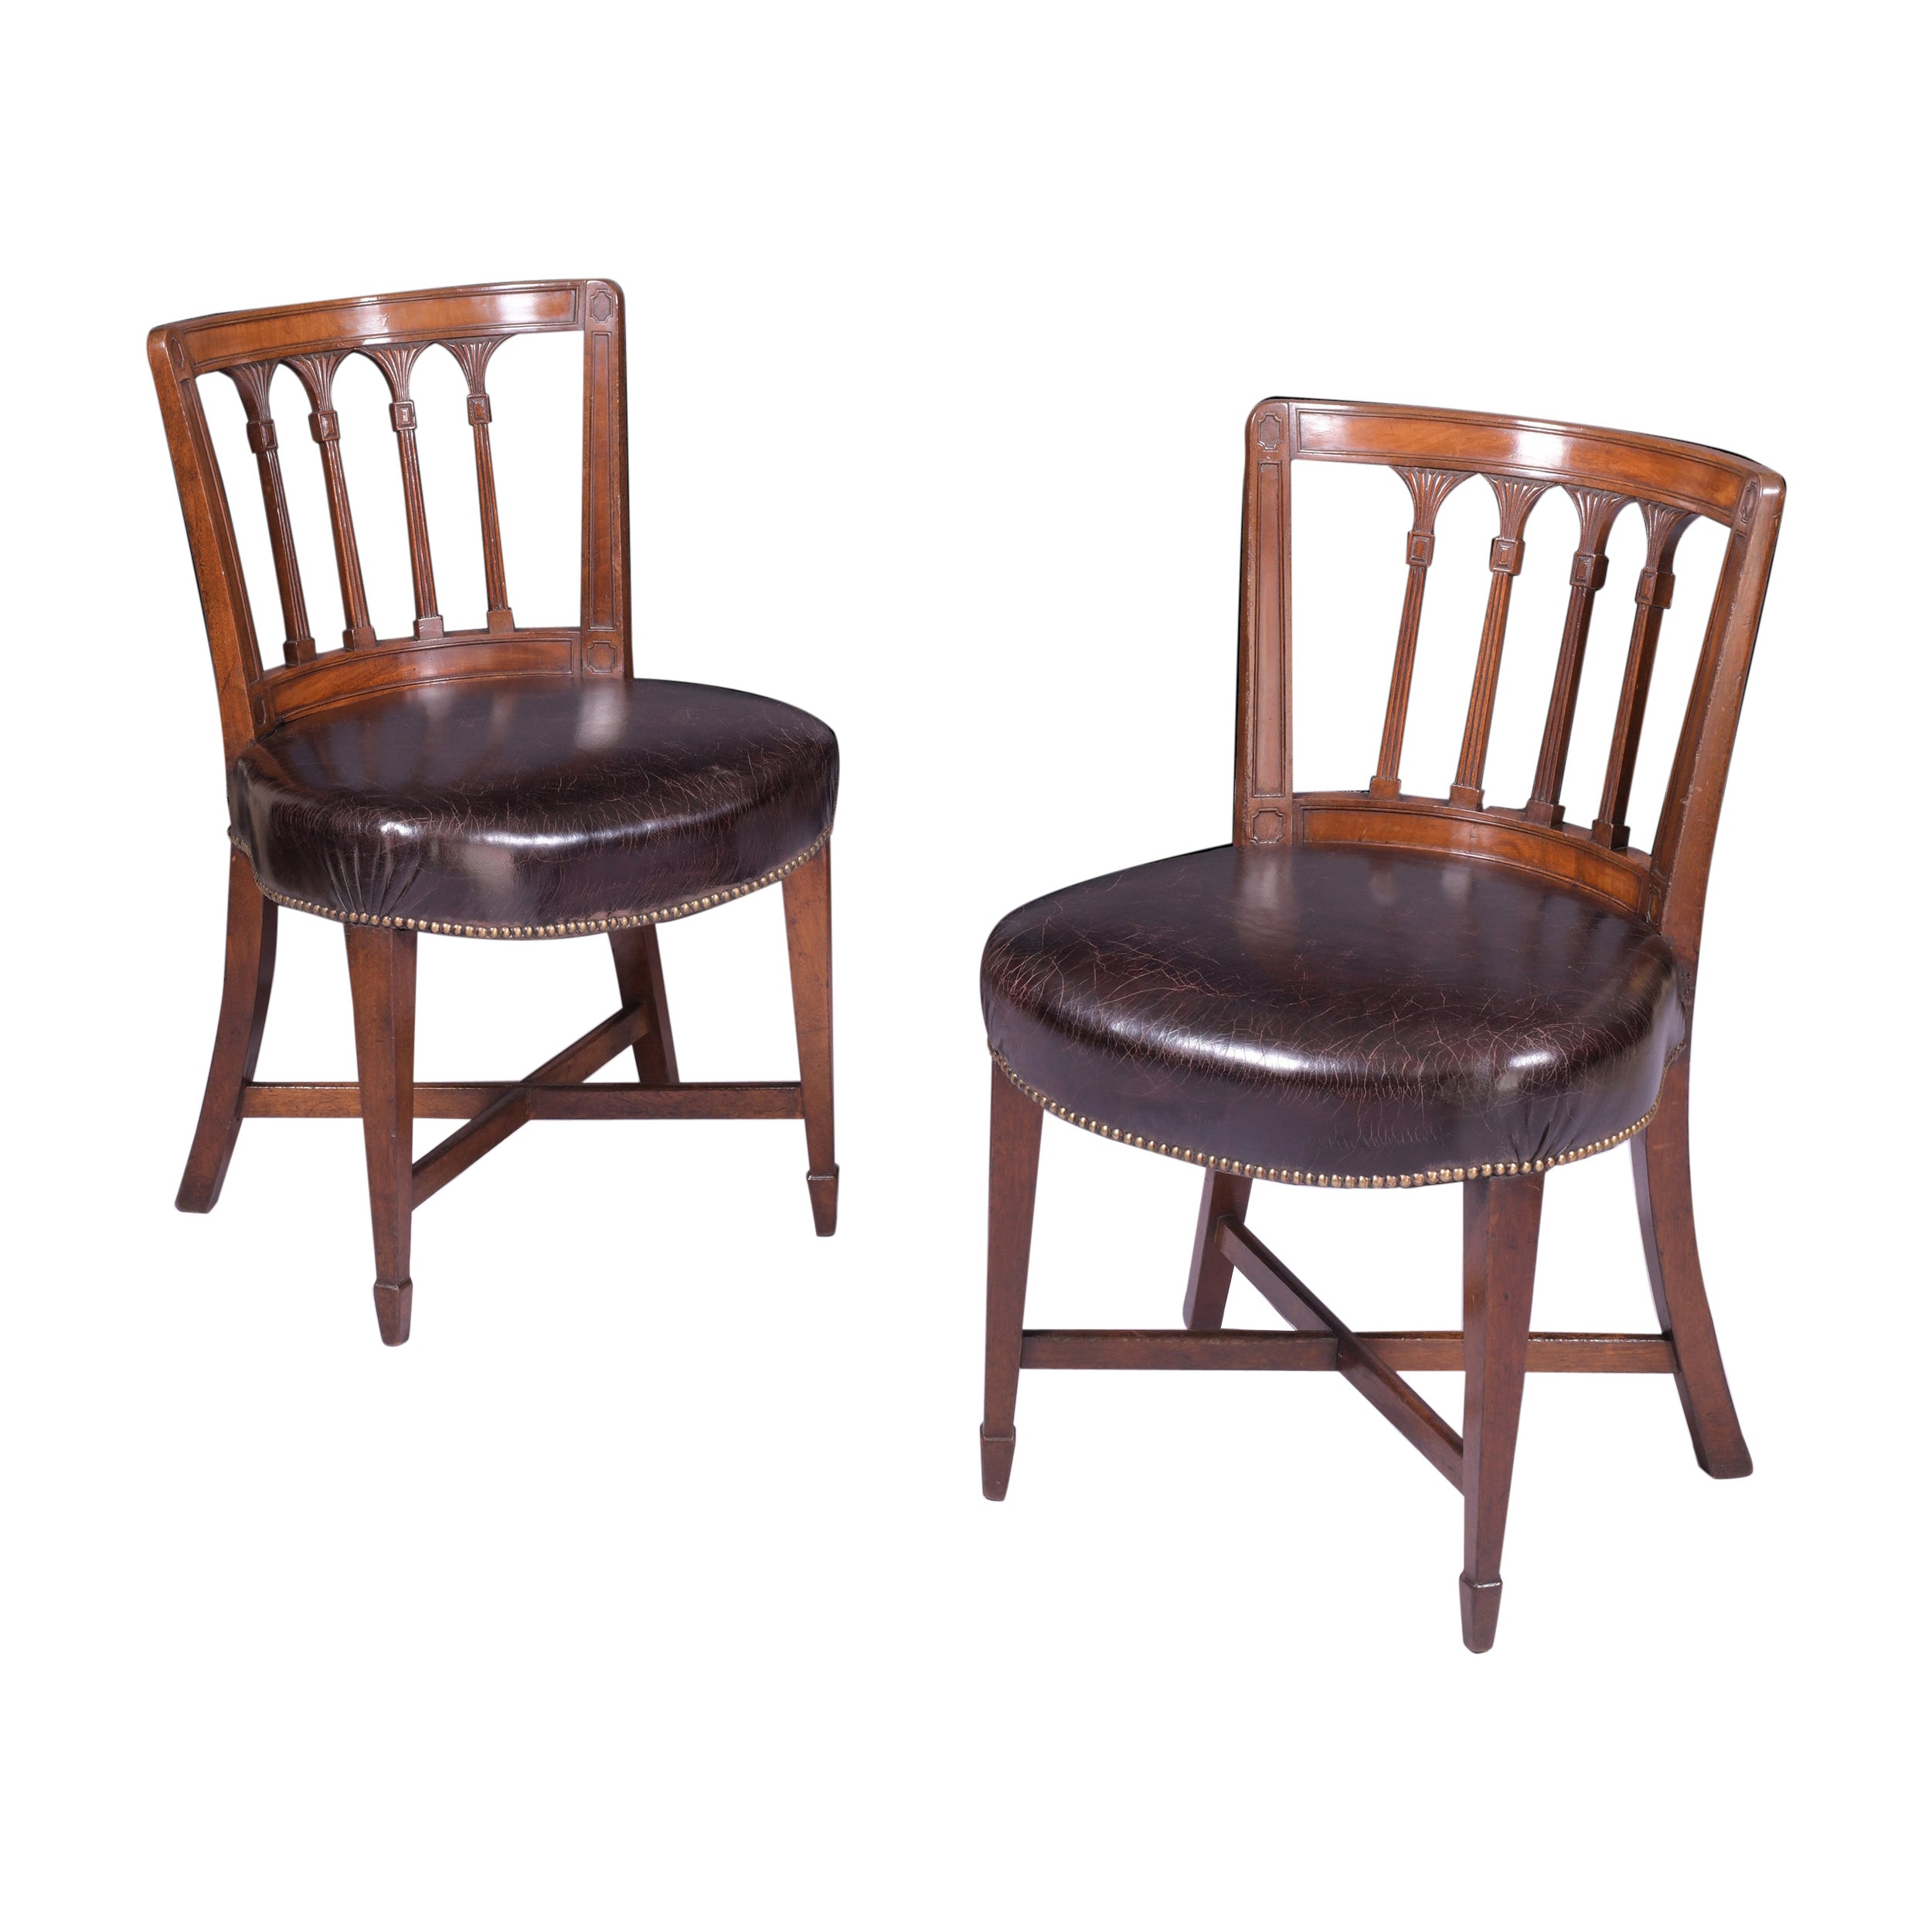 Beistellstühle aus dem frühen 19. Jahrhundert, Gillows of Lancaster zugeschrieben, Paar